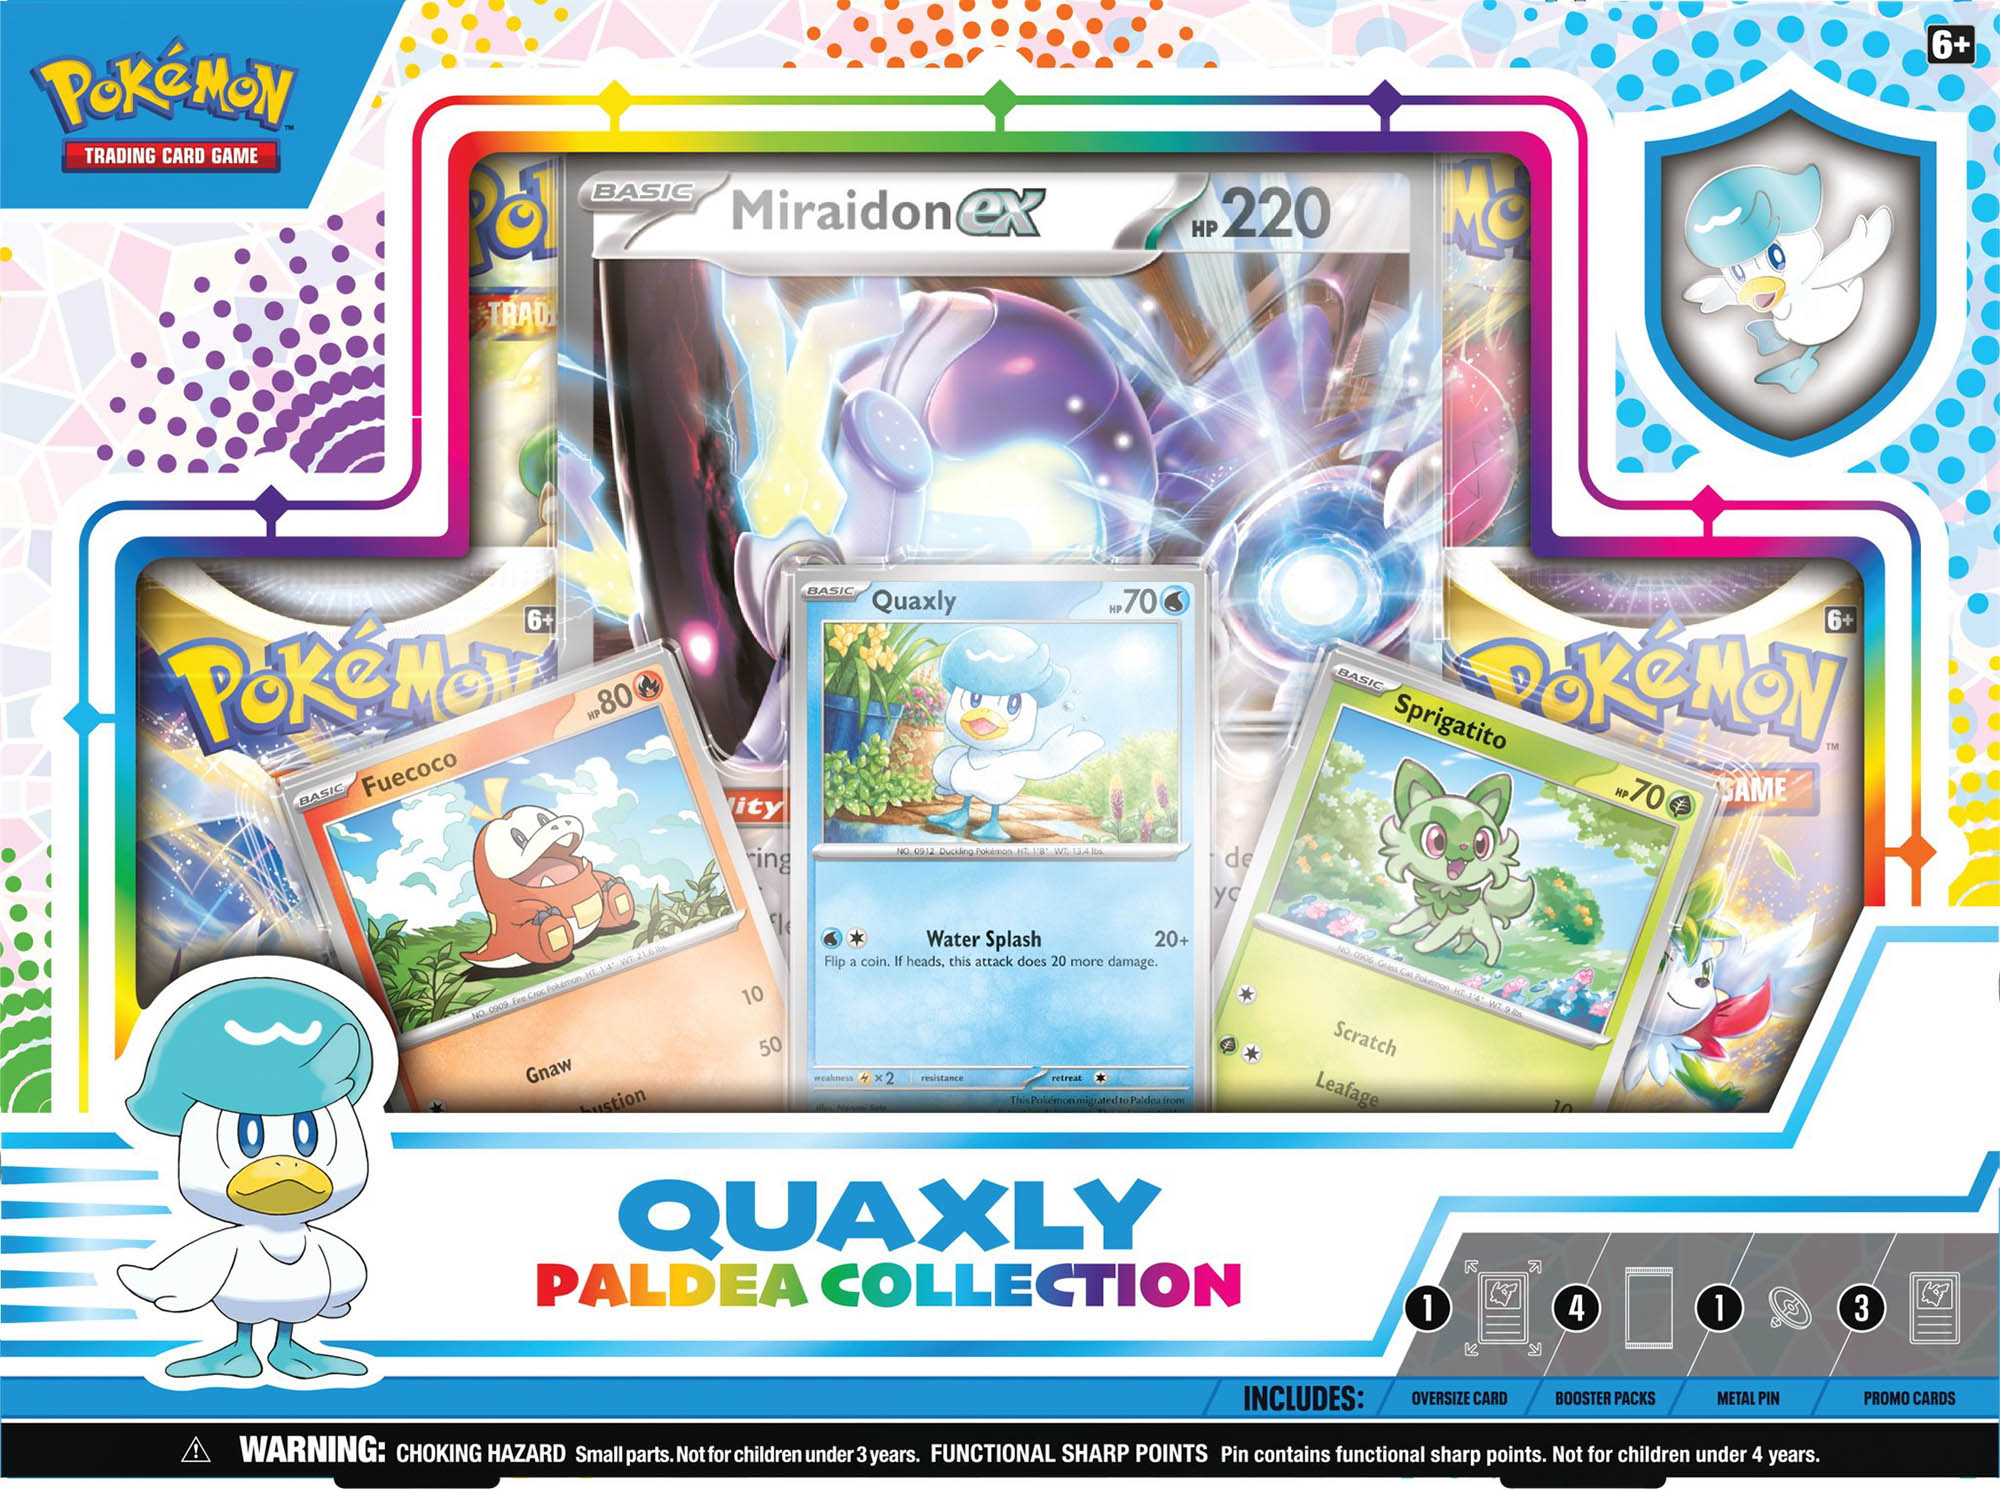 Pokemon Paldea Collection Box - Quaxly with Miraidon